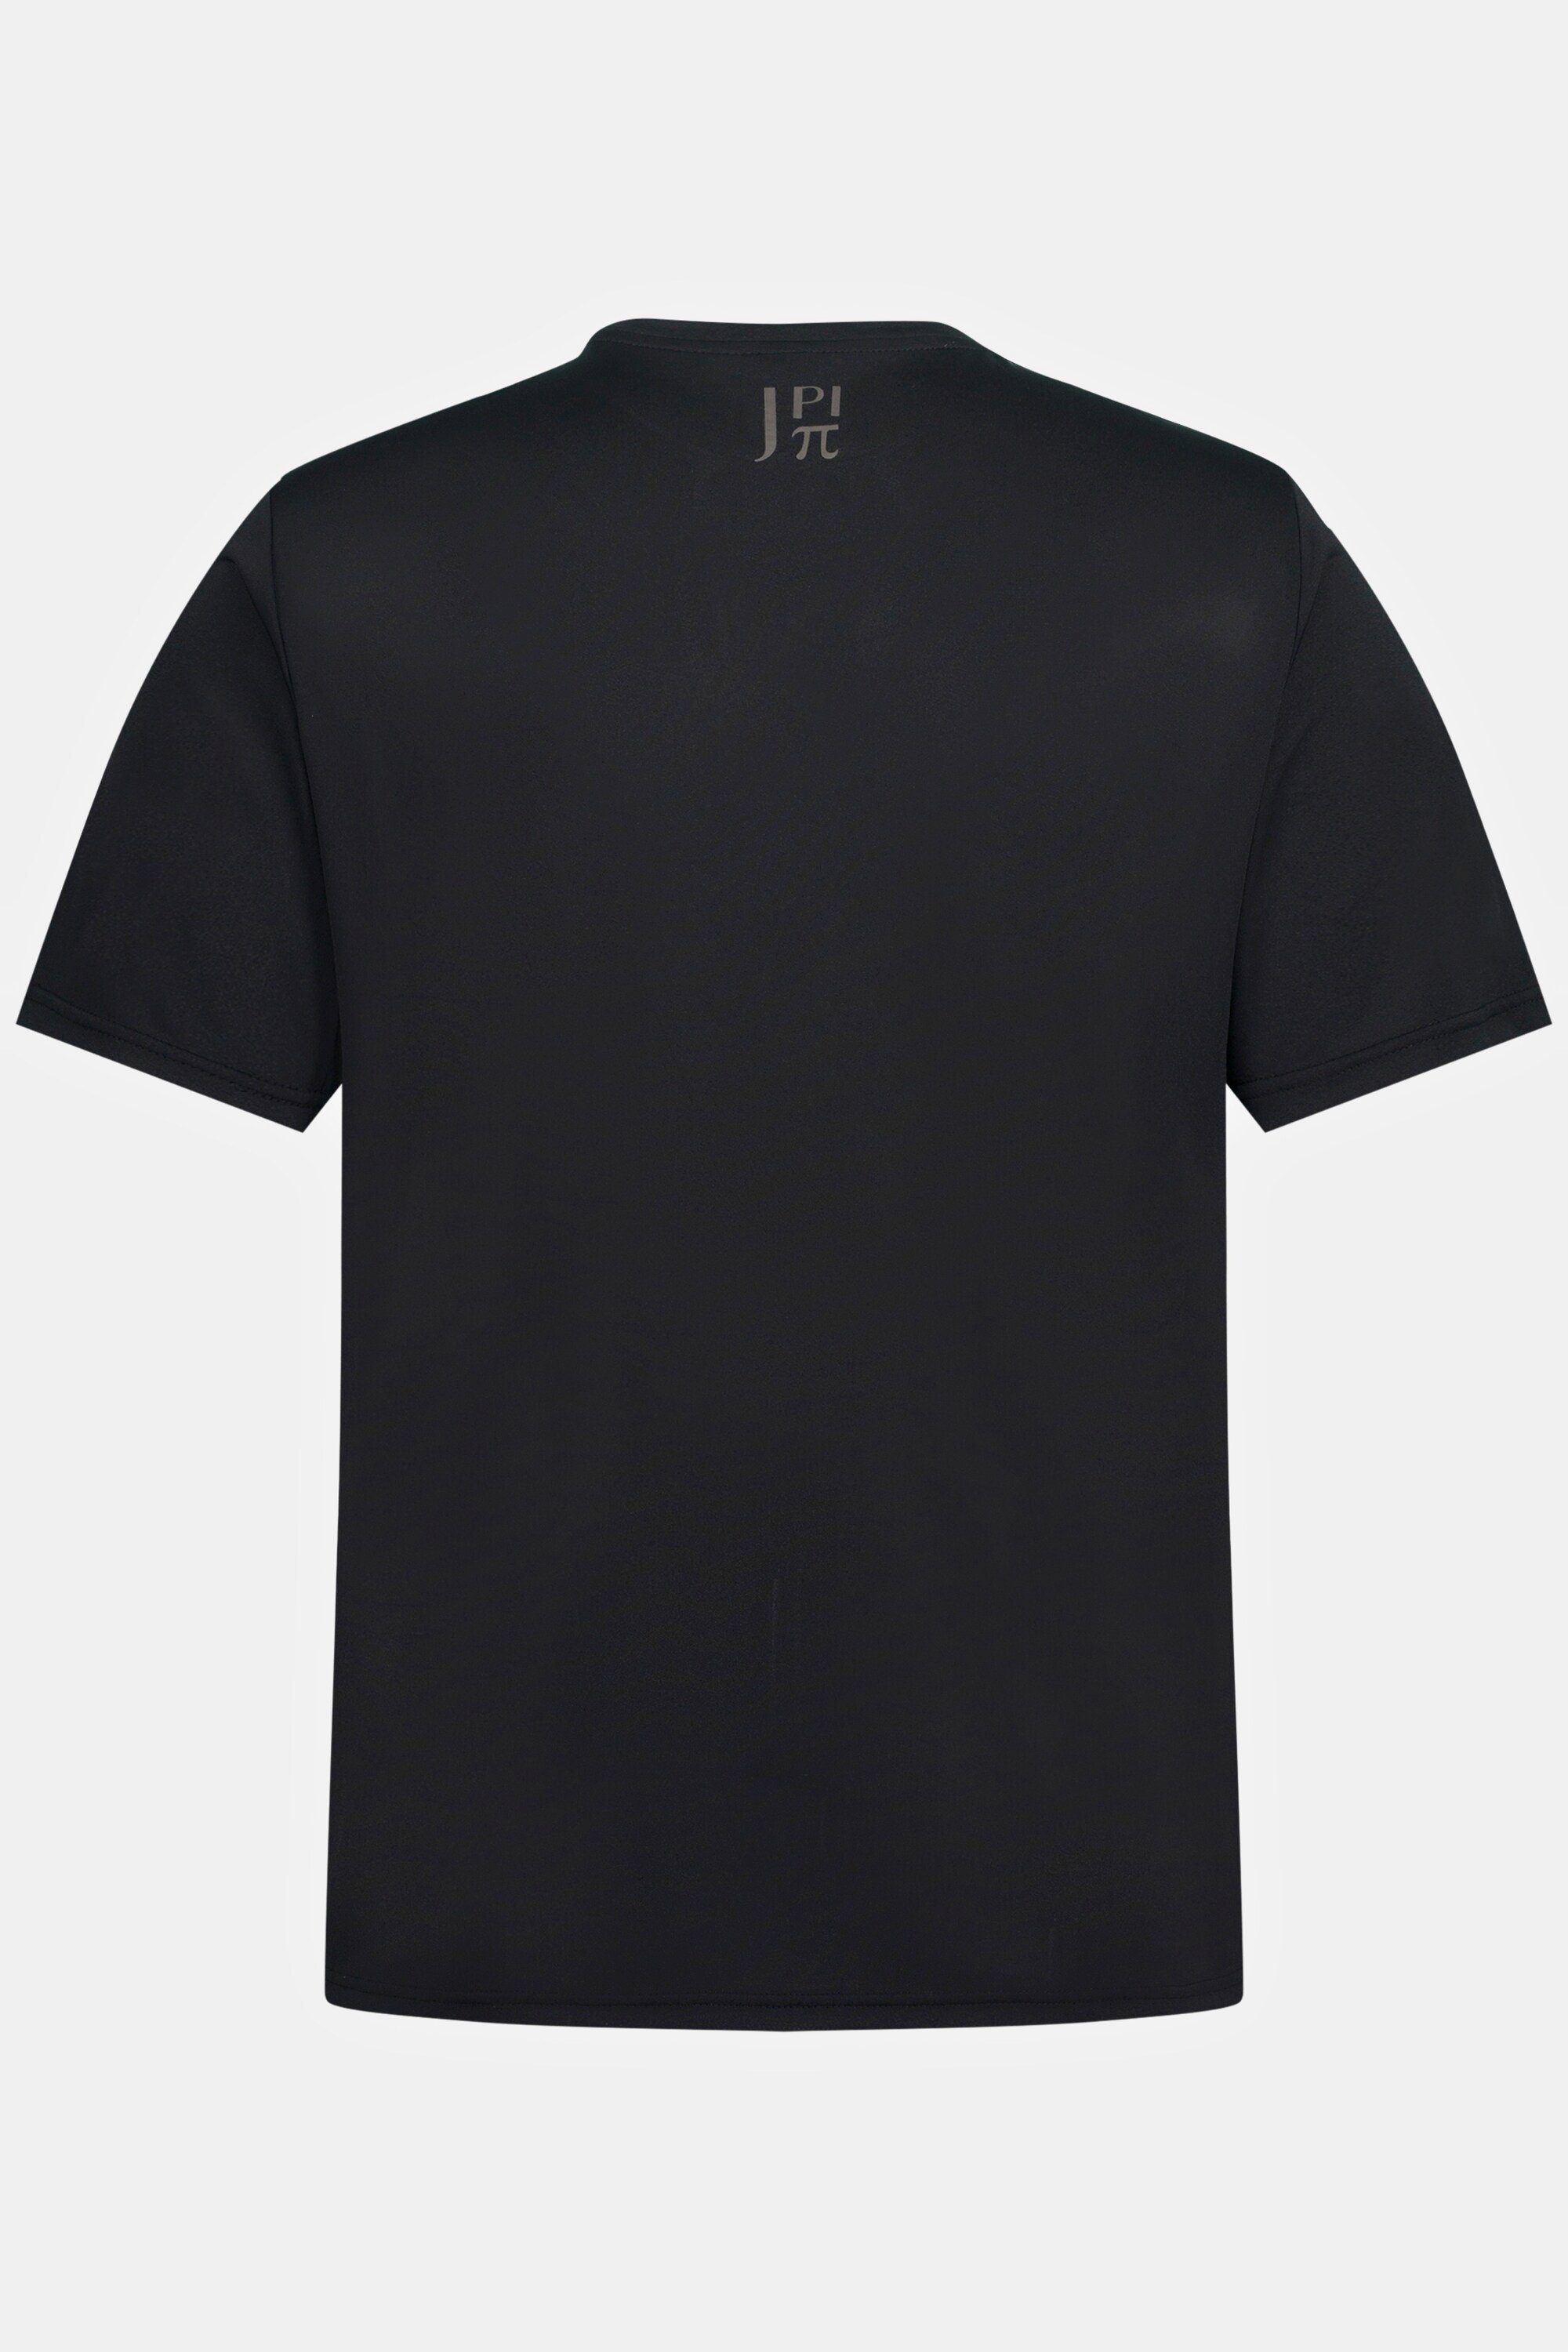 JP1880 QuickDry Halbarm Outdoor Trekking-Shirt T-Shirt